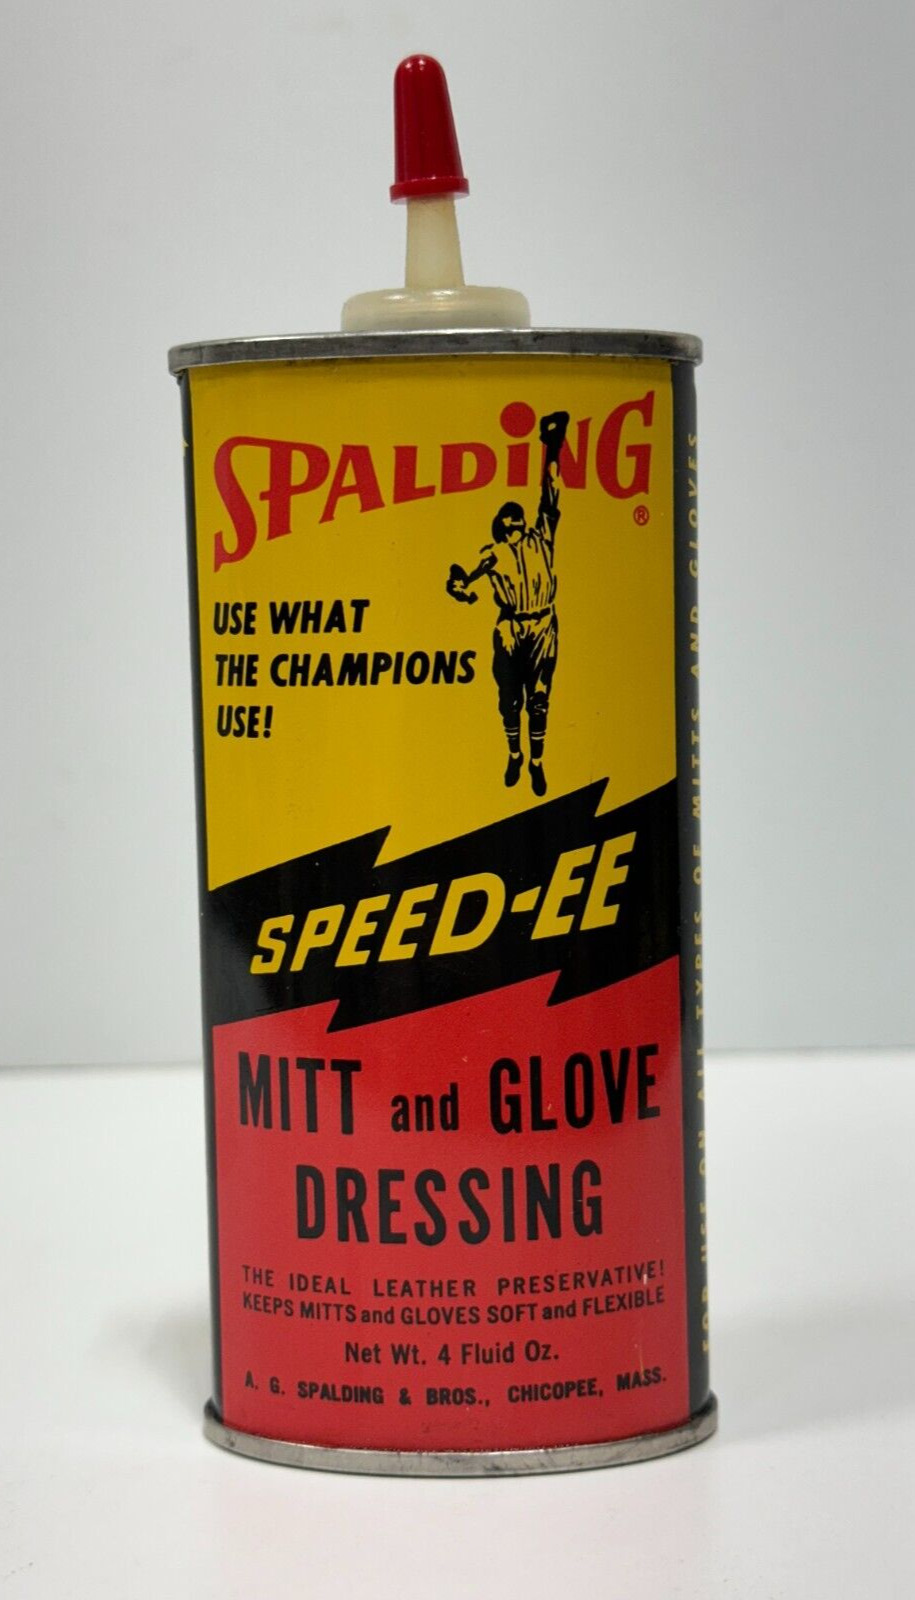 Vtg advertising Spalding SPEED-EE Mitt and Glove Dressing Oil Can Baseball Tin